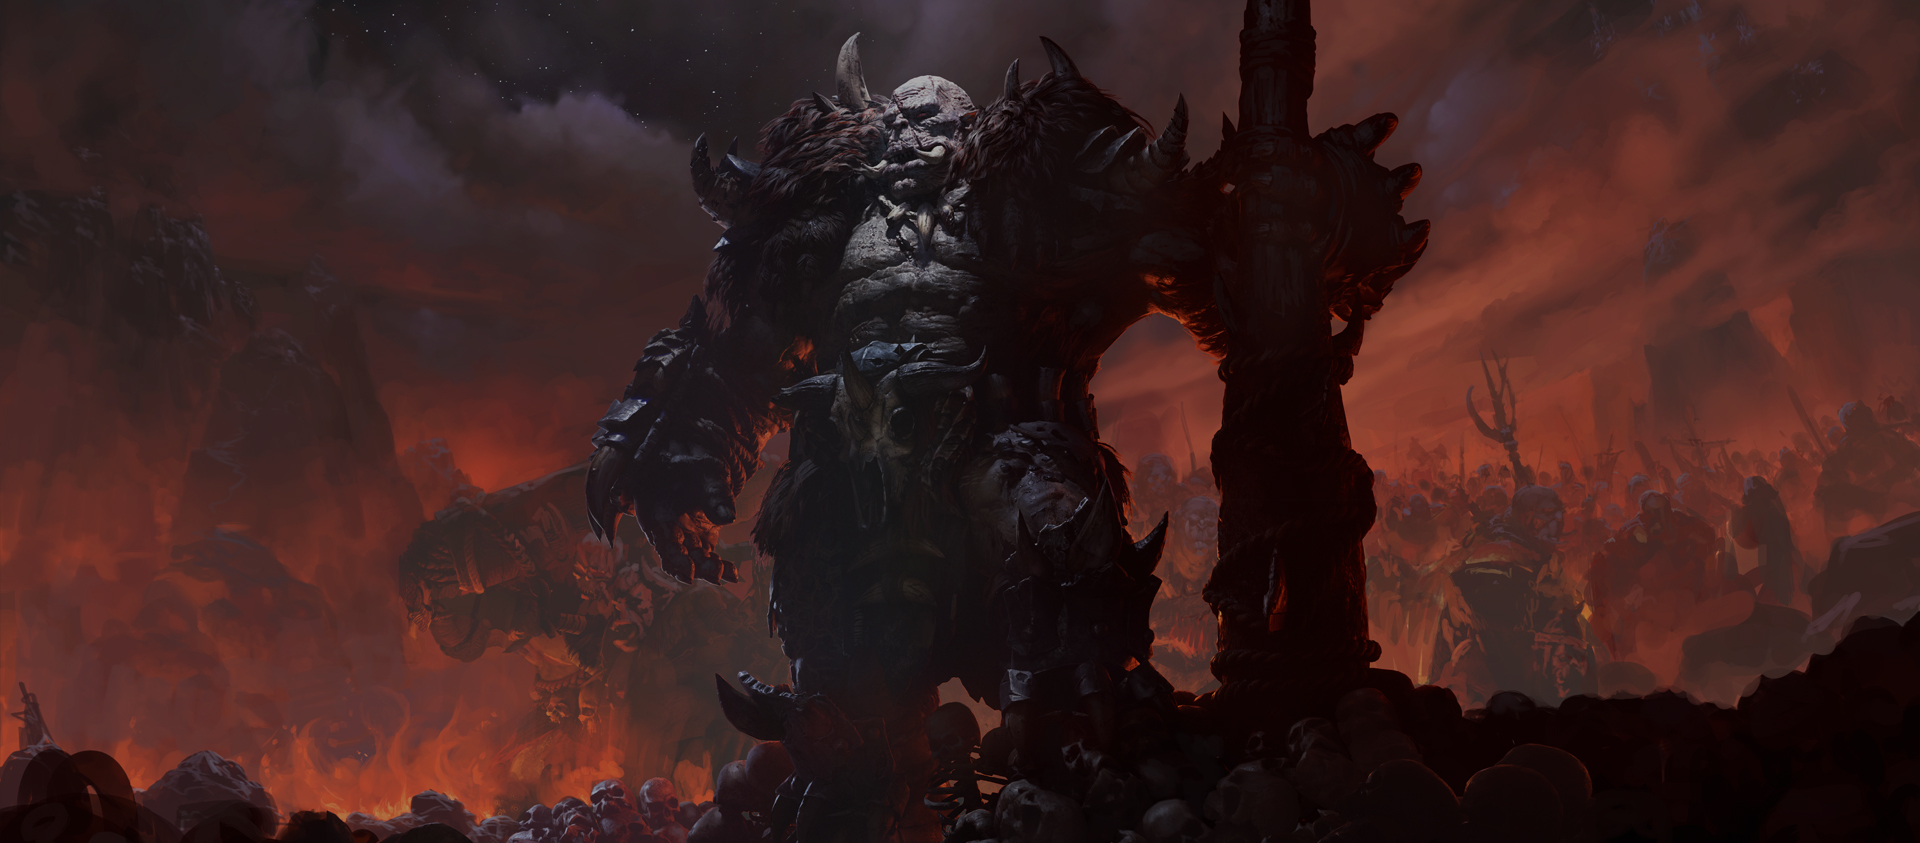 Header image SpellForce 3: Fallen God and Versus Edition released!